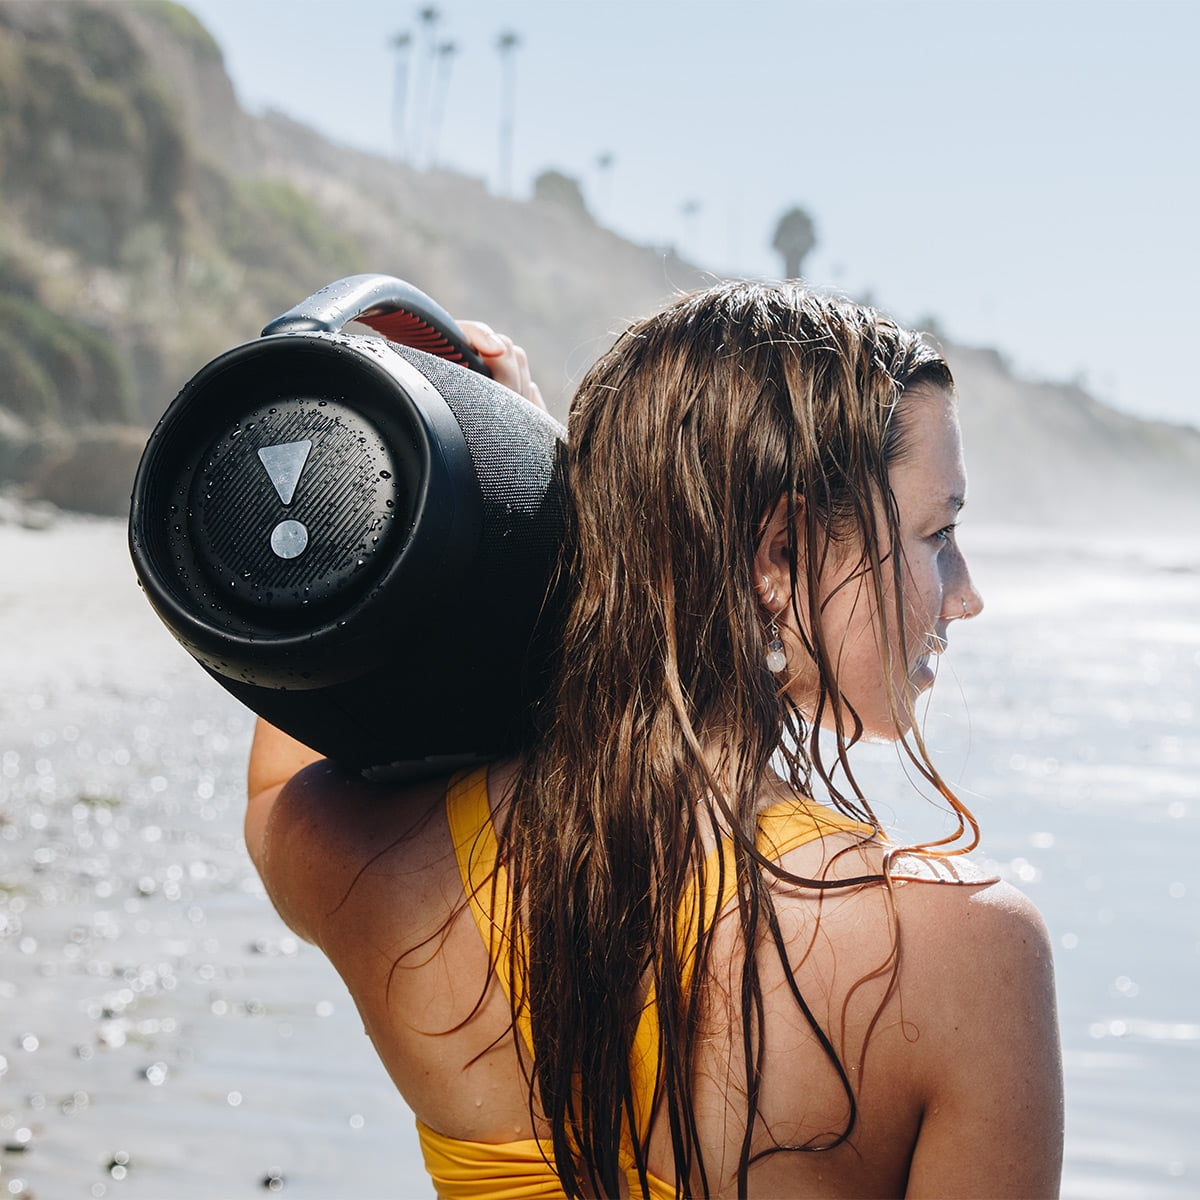 JBL Boombox 3 Waterproof Portable Bluetooth Speaker - Black - Comprar  Magazine